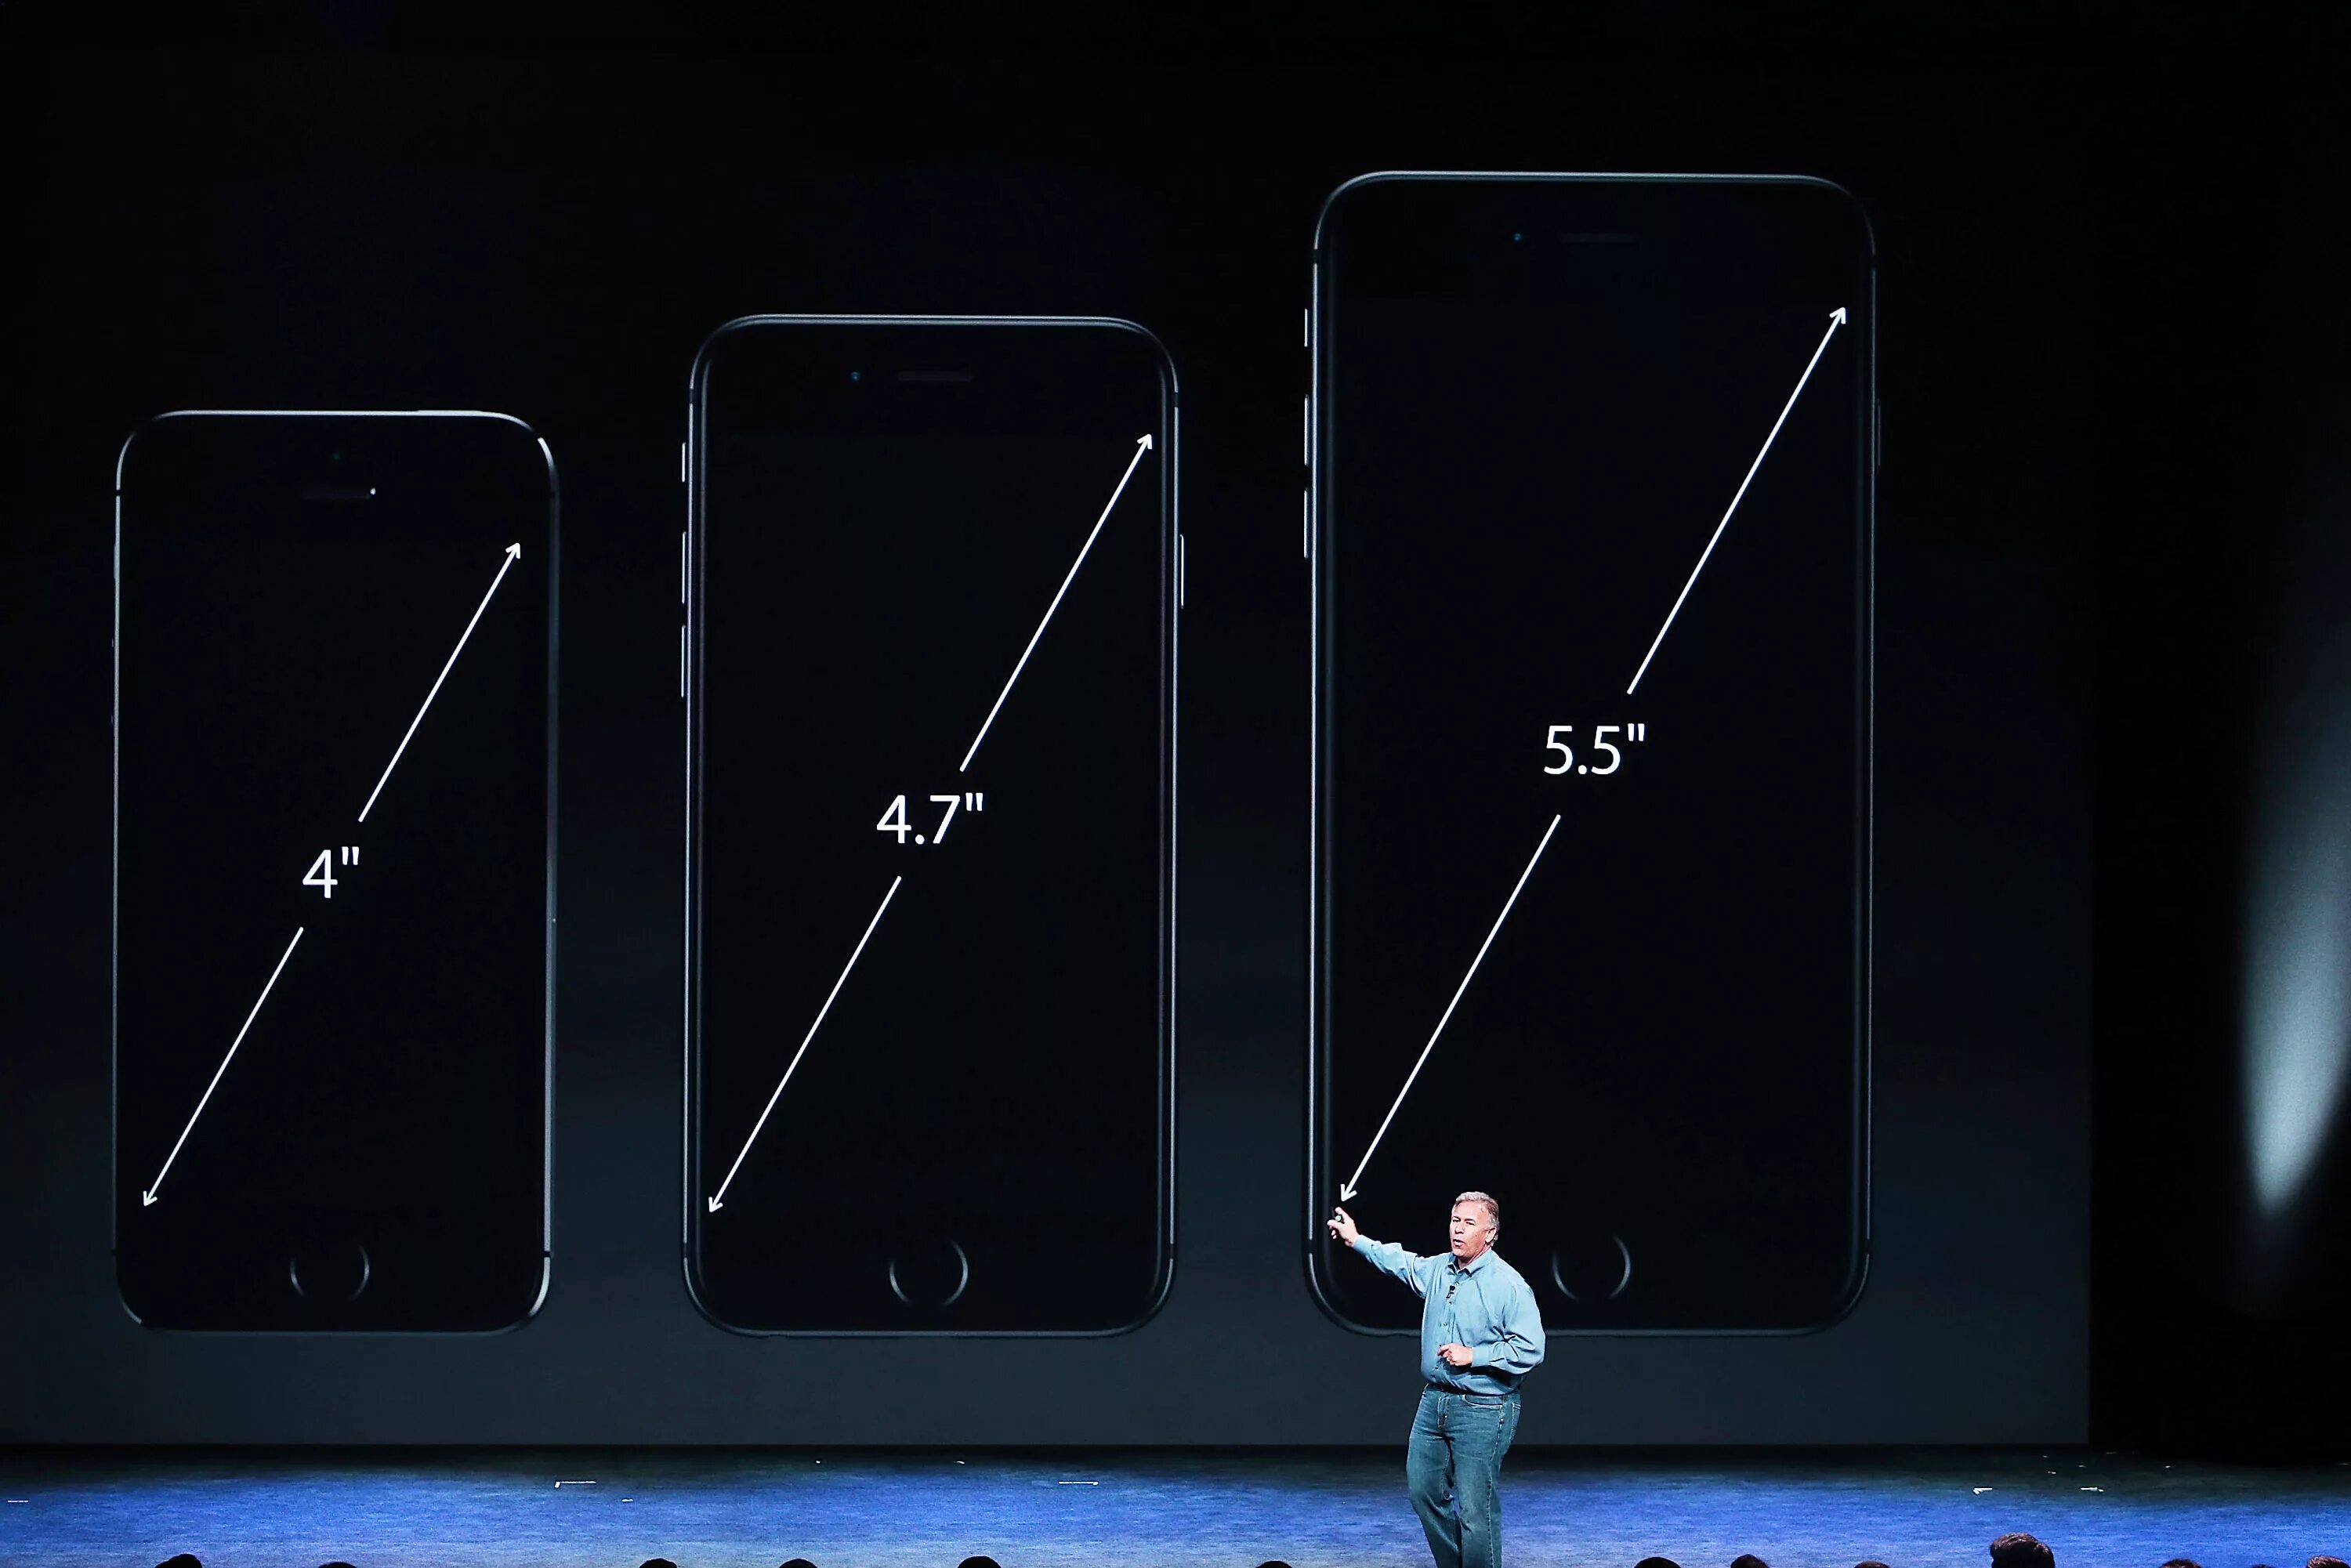 Iphone диагонали экрана. Айфон 6 диагональ экрана. Iphone 6 Plus диагональ экрана. Айфон диагональ 6.1. Айфон 6s диагональ экрана.